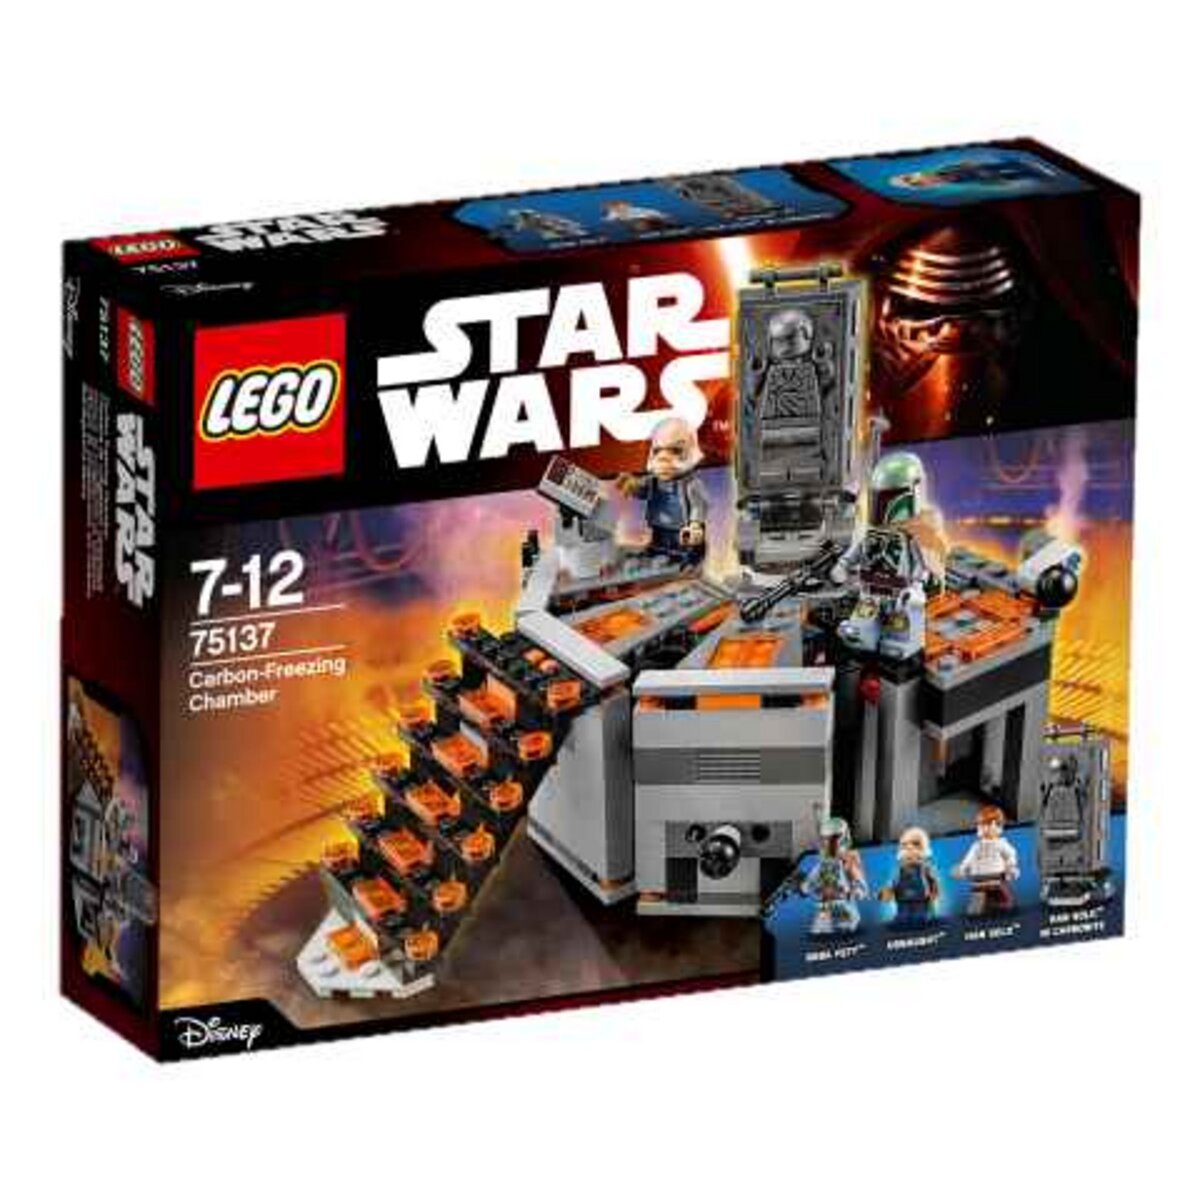 LEGO Star Wars 75137 - Chambre de congélation carbonique